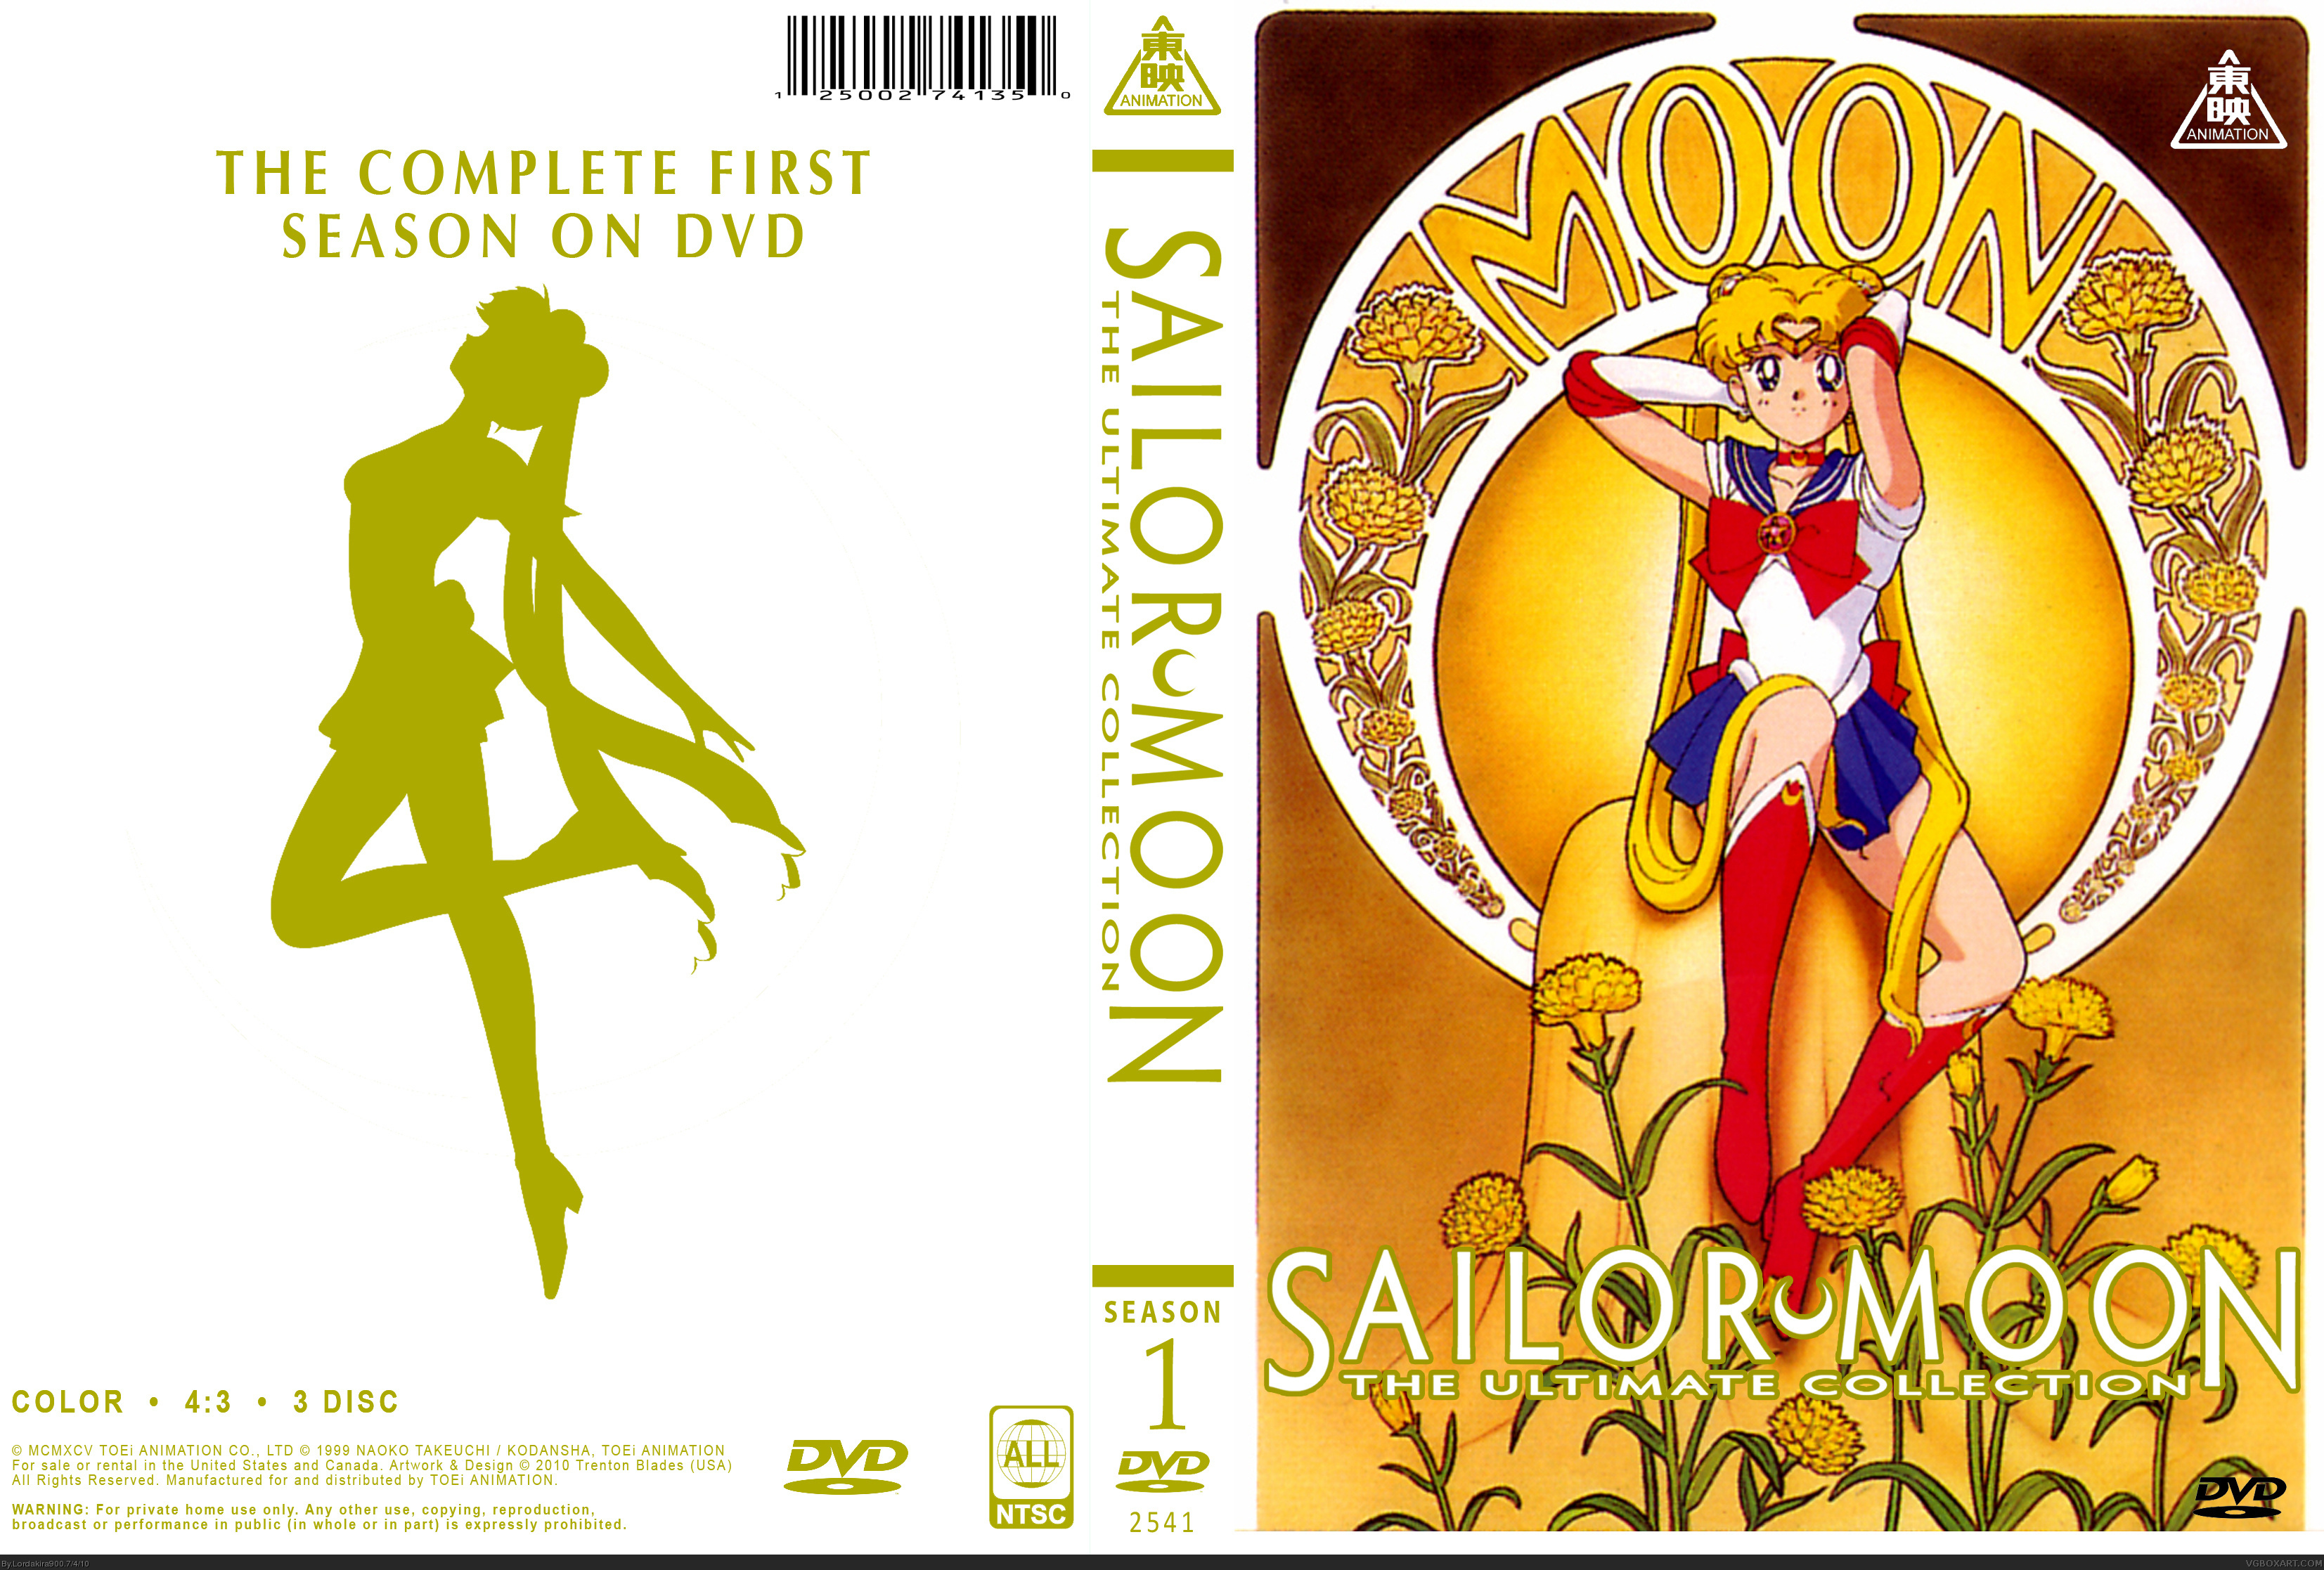 Sailor Moon Season 1 box cover